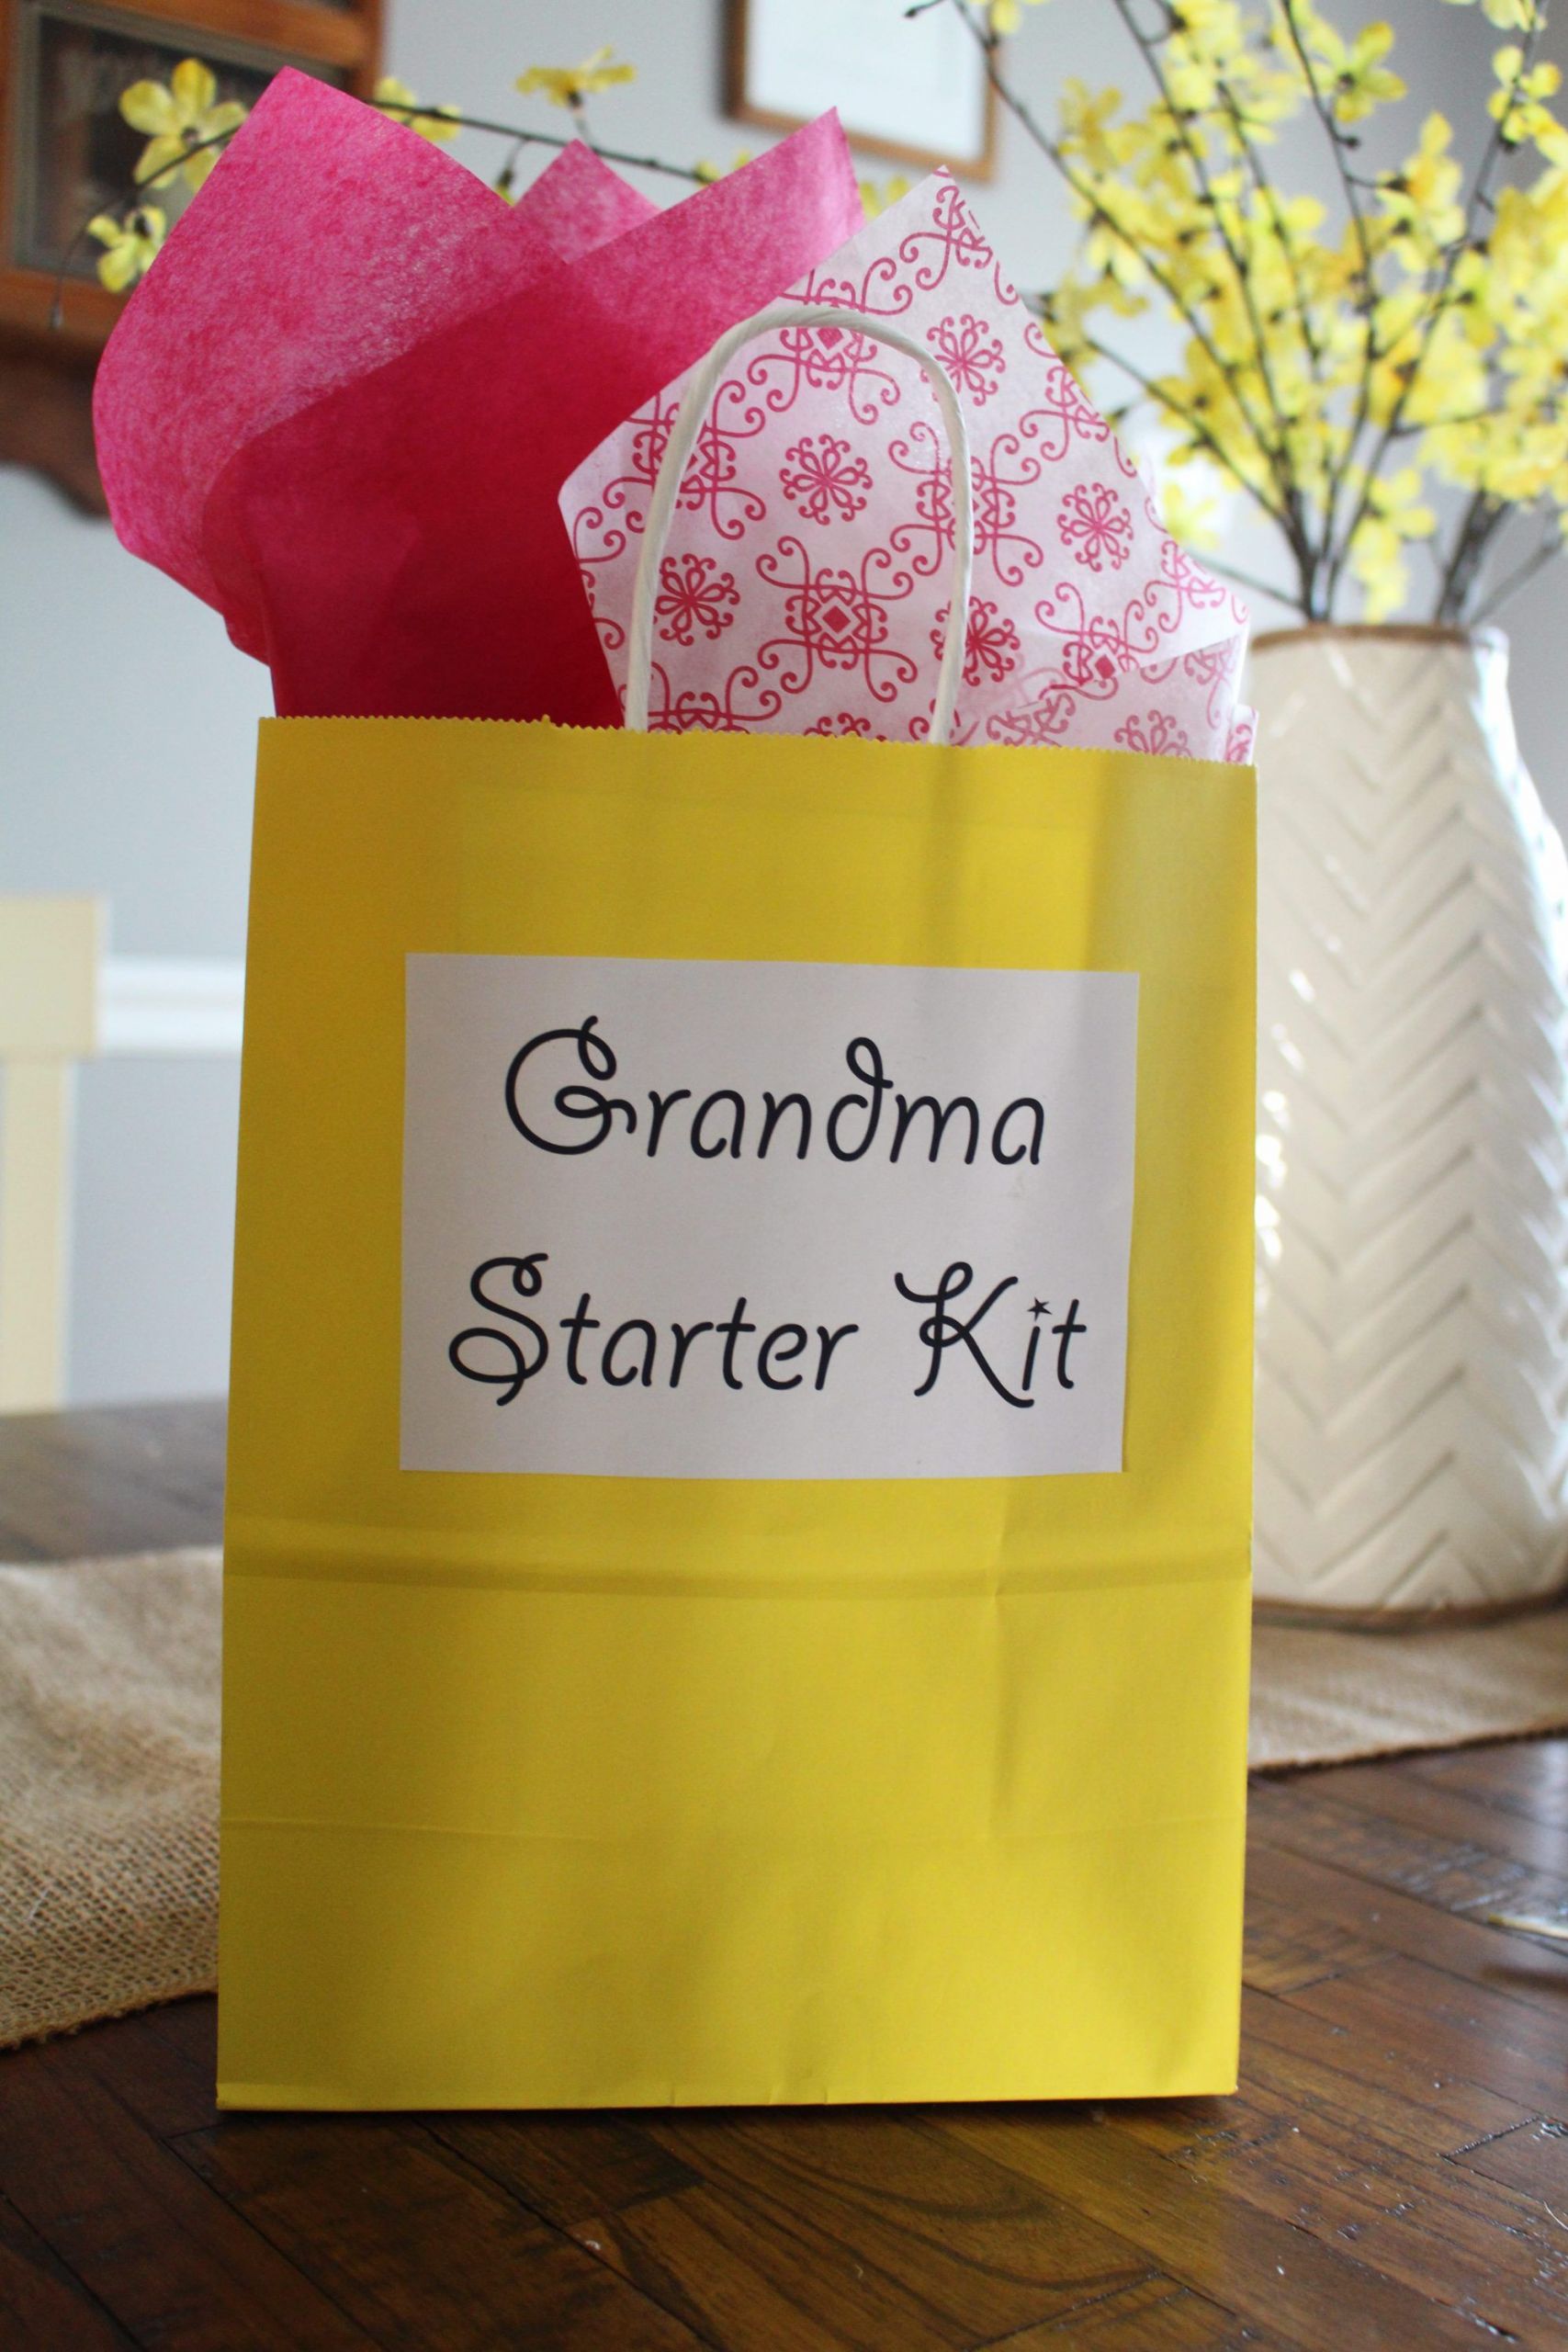 Grandma Baby Shower Gift Ideas
 Grandma Starter Kits